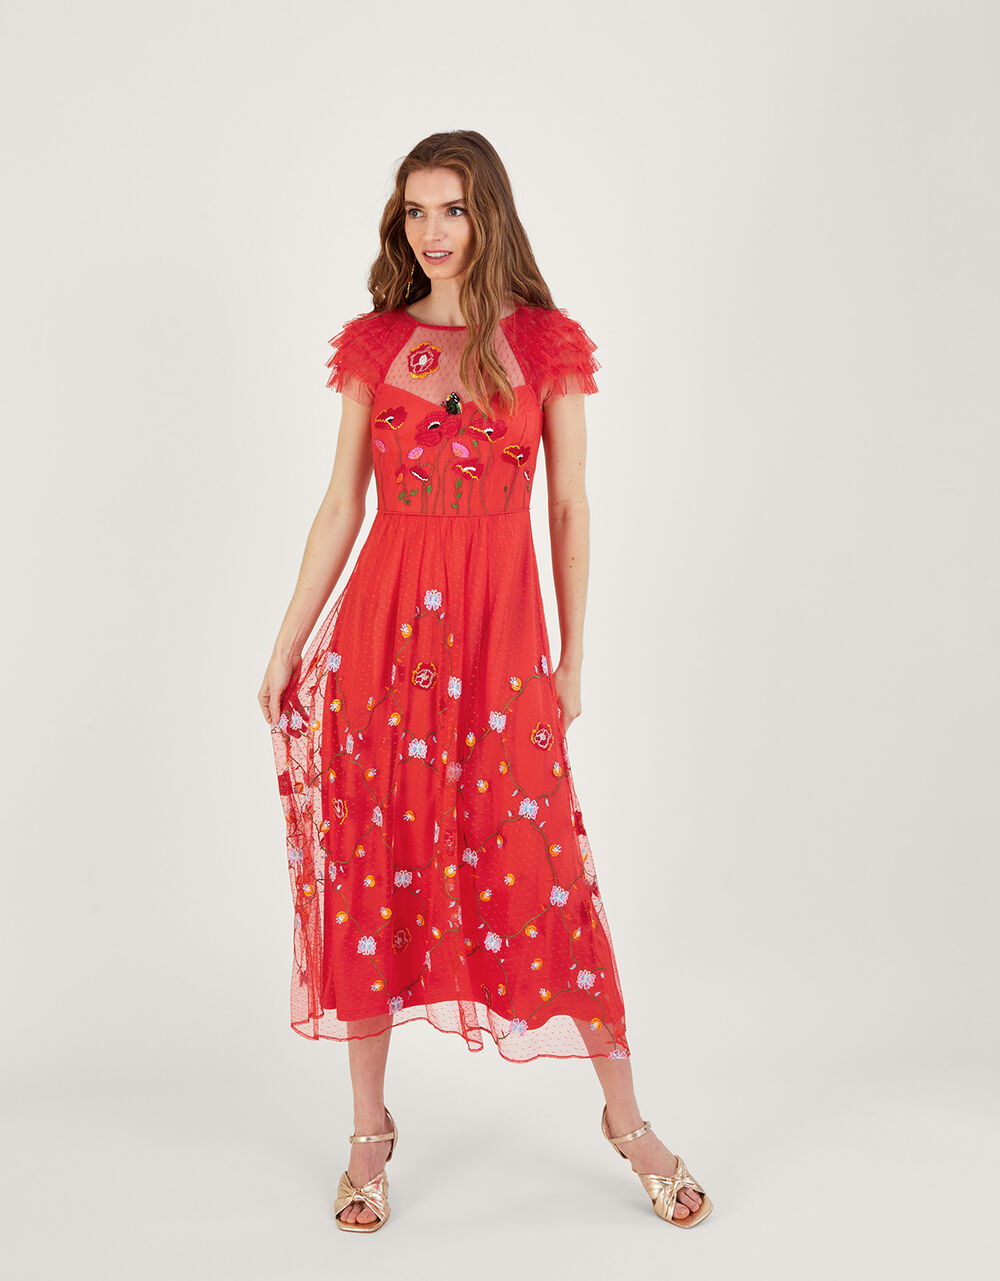 Octavia embroidered midi dress red - Monsoon Accessorize Malta